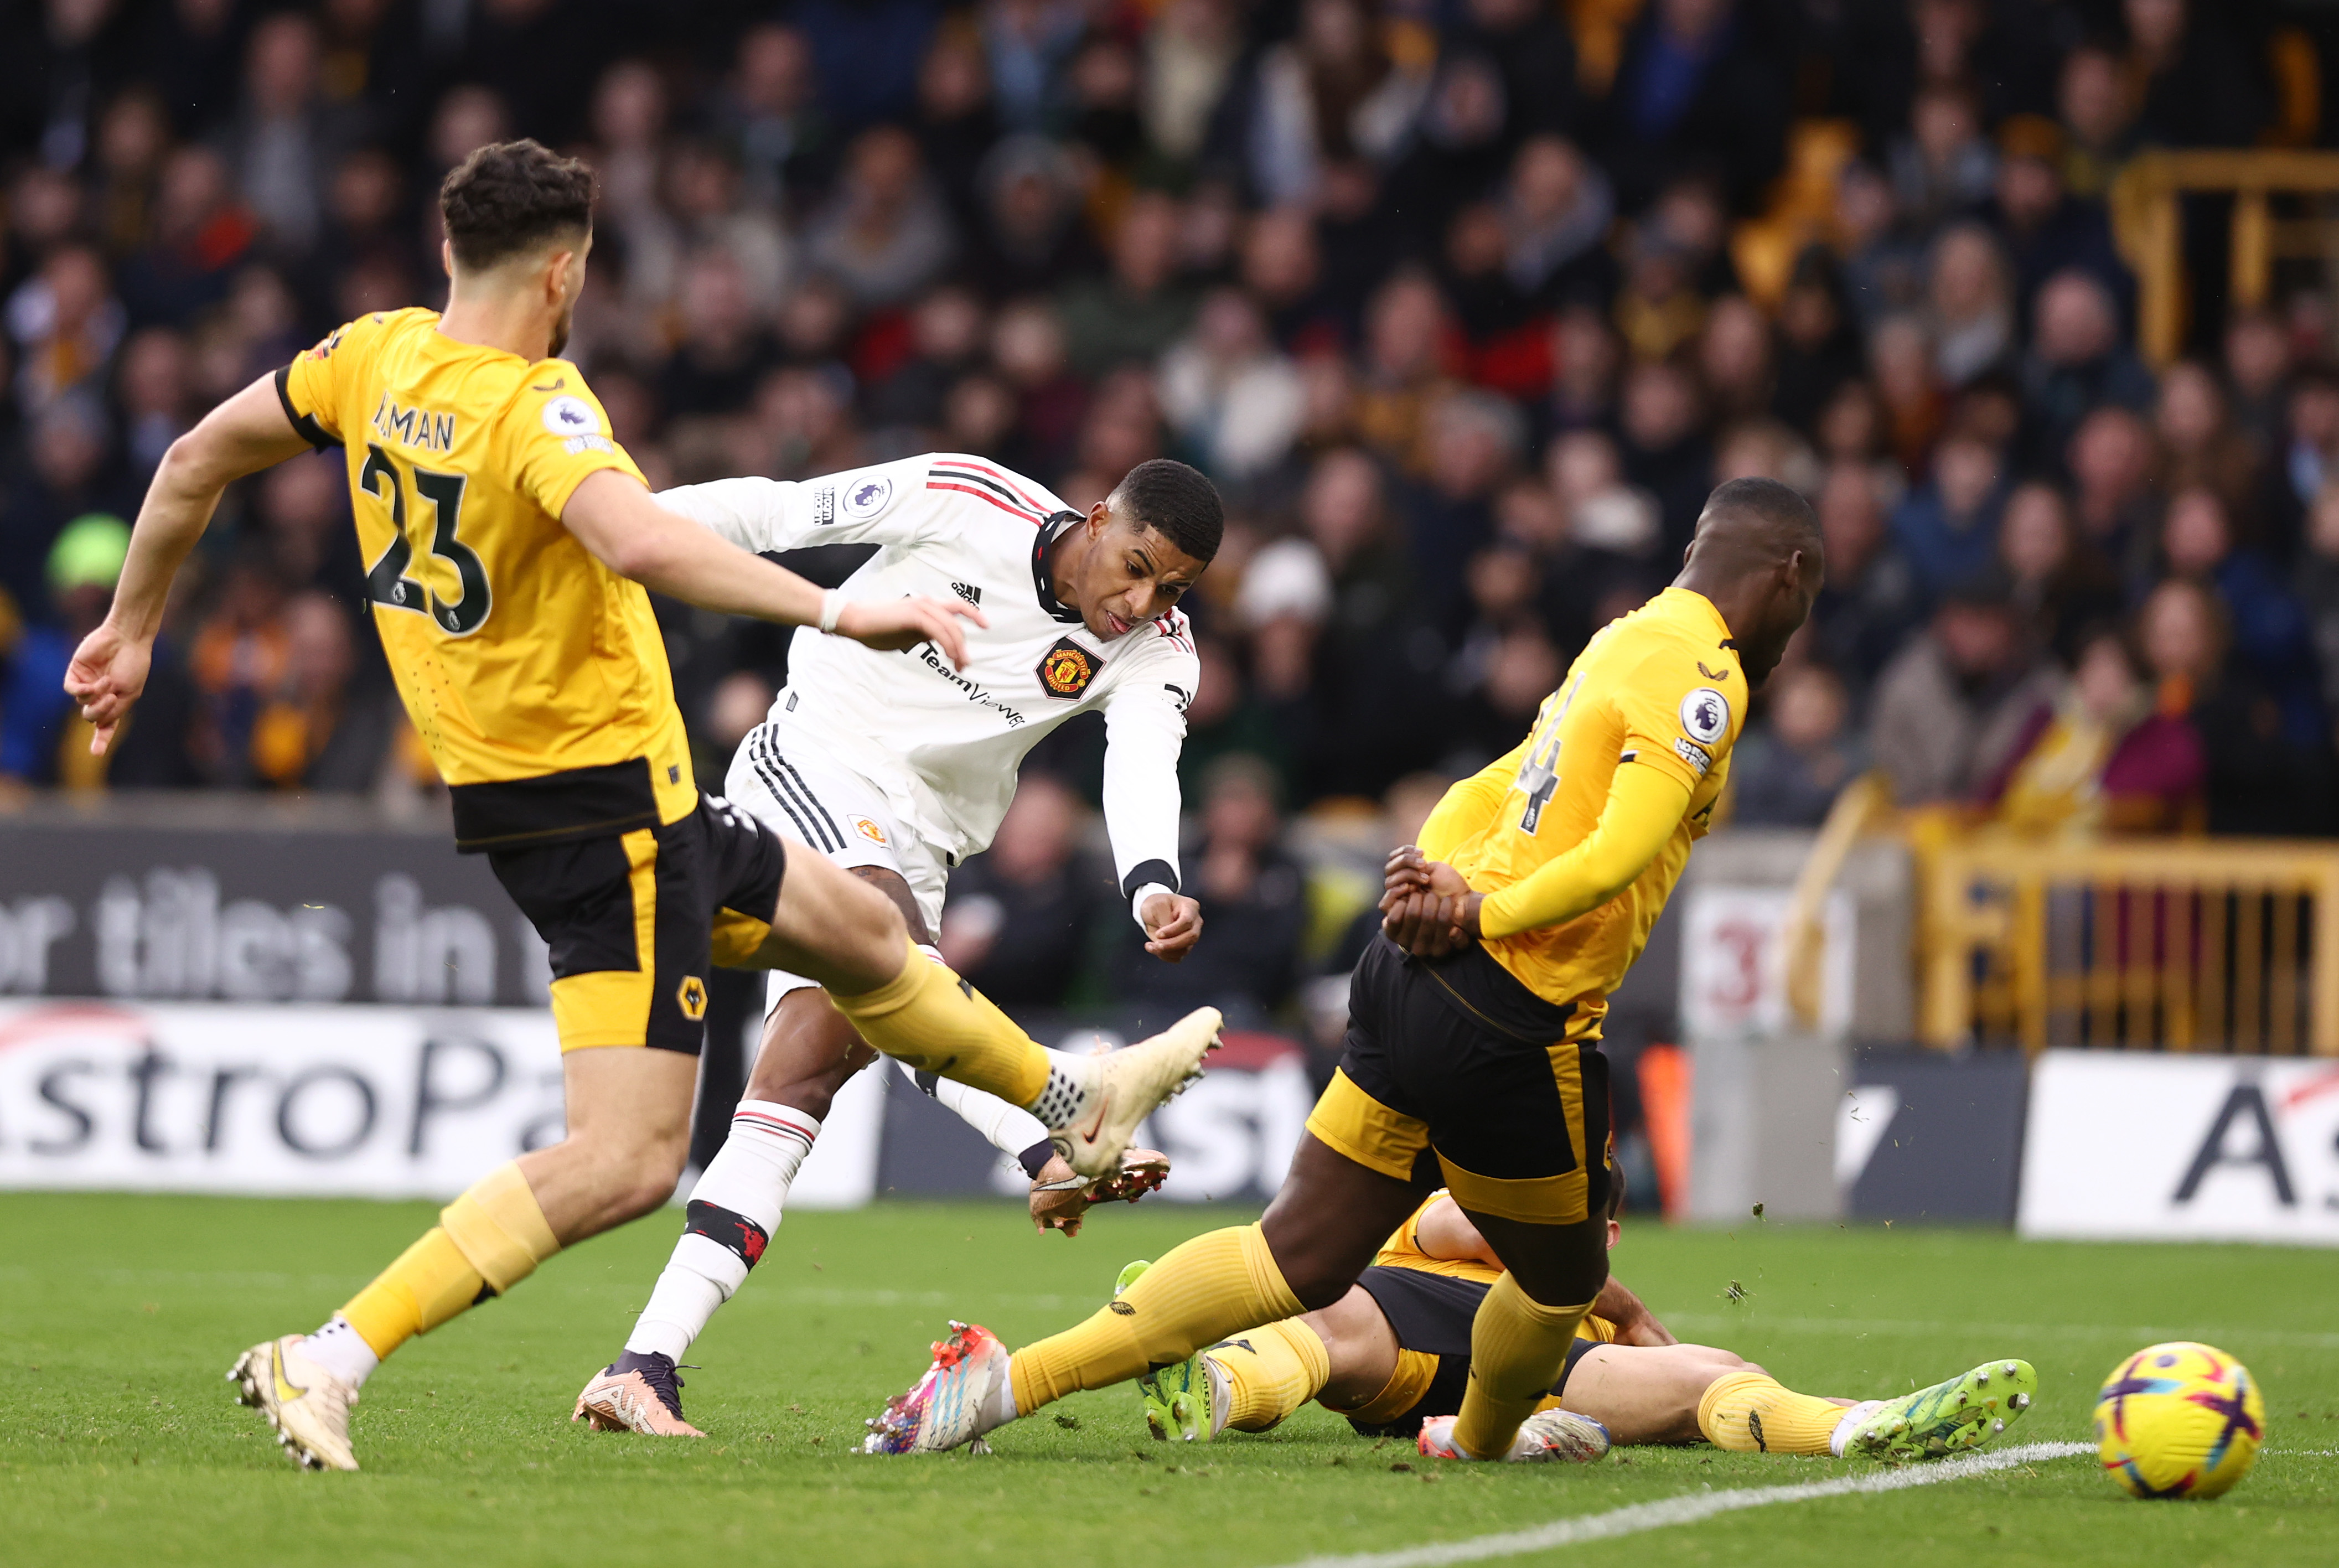 Wolverhampton - Manchester United 0-1, ACUM, pe Digi Sport 1. Rezerva Rashford, un gol și altul anulat